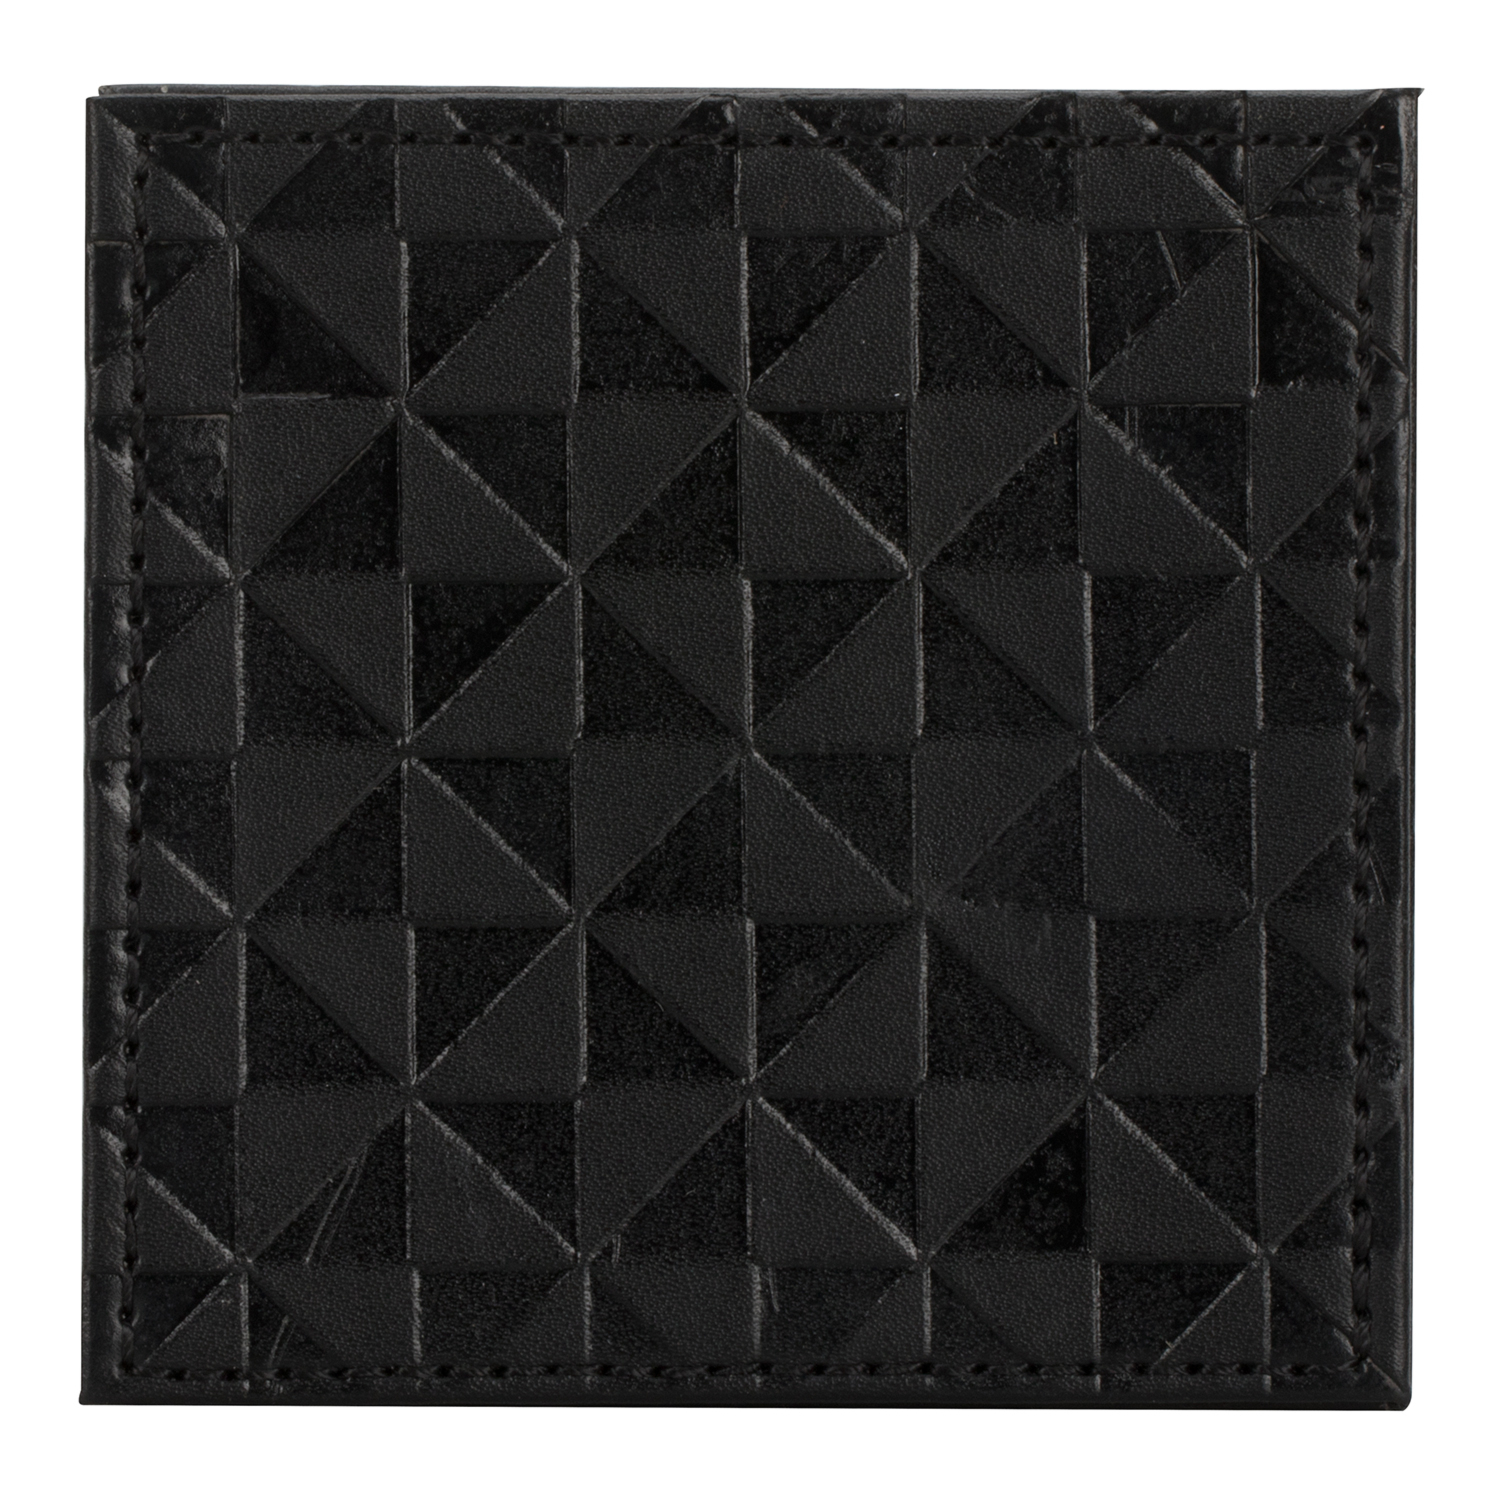 Set of Four Fusion Coasters Black Diamond Image